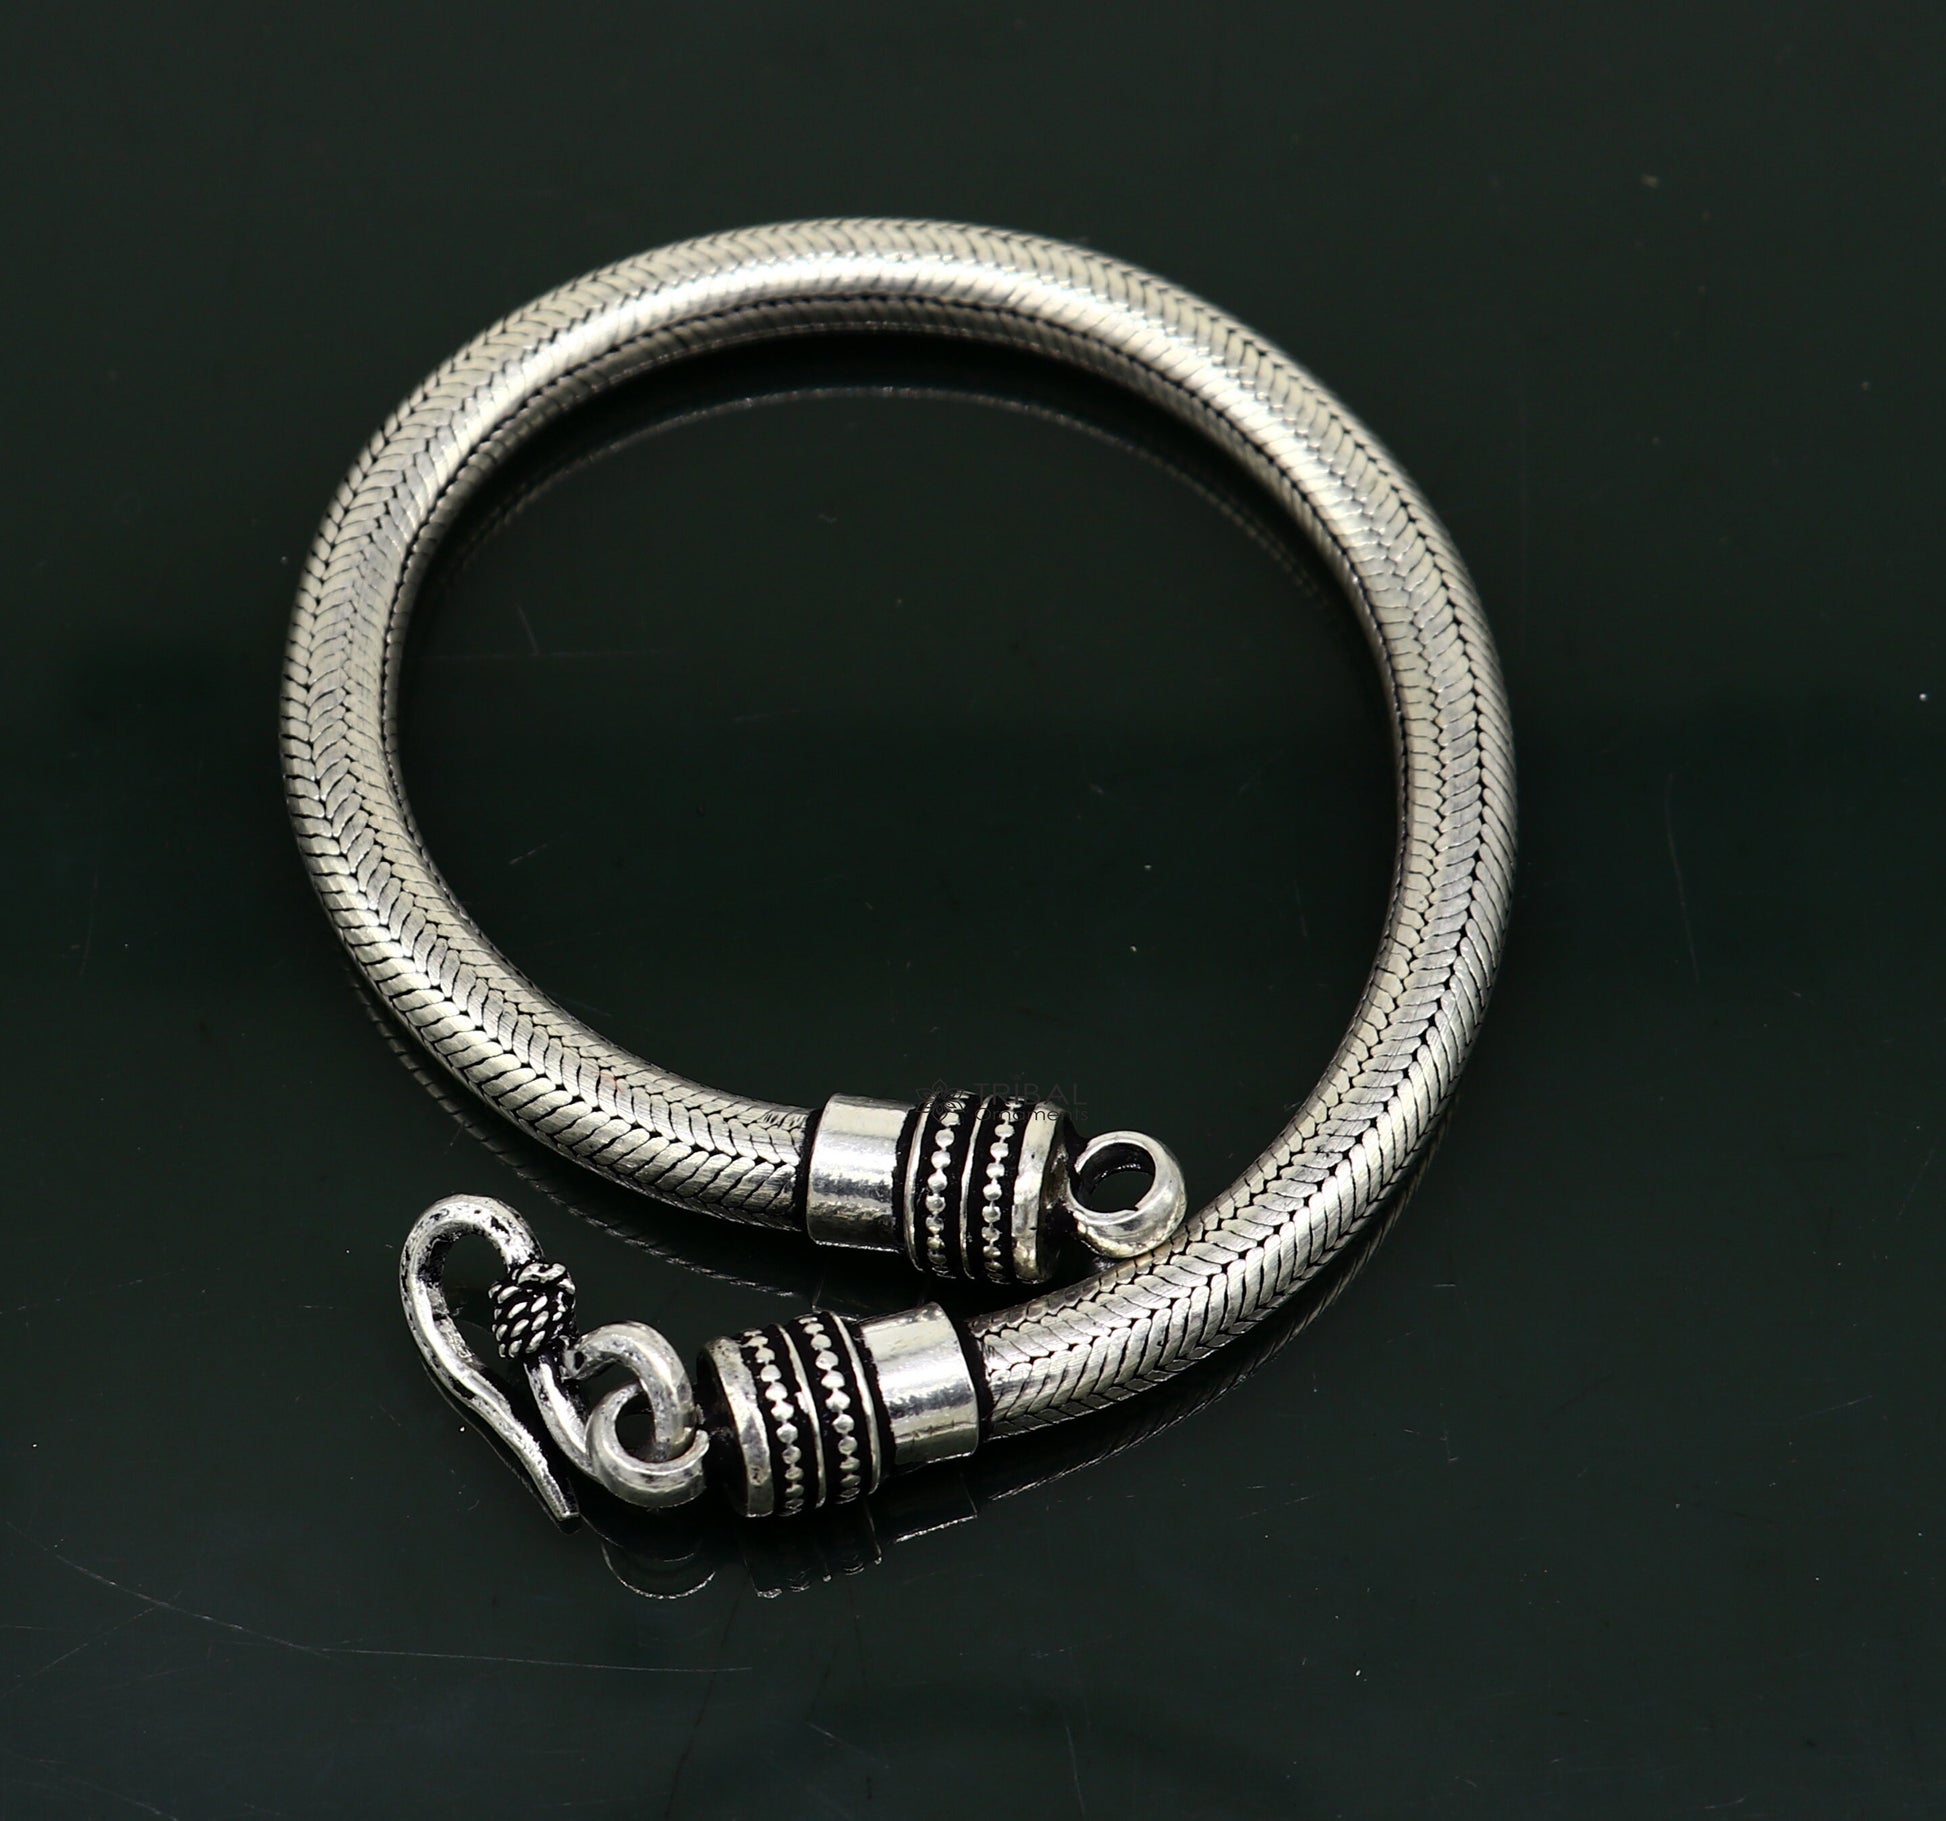 6MM Solid 925 sterling silver handmade amazing snake chain flexible unisex bracelet jewelry elegant custom wrist belt bracelet india sbr680 - TRIBAL ORNAMENTS